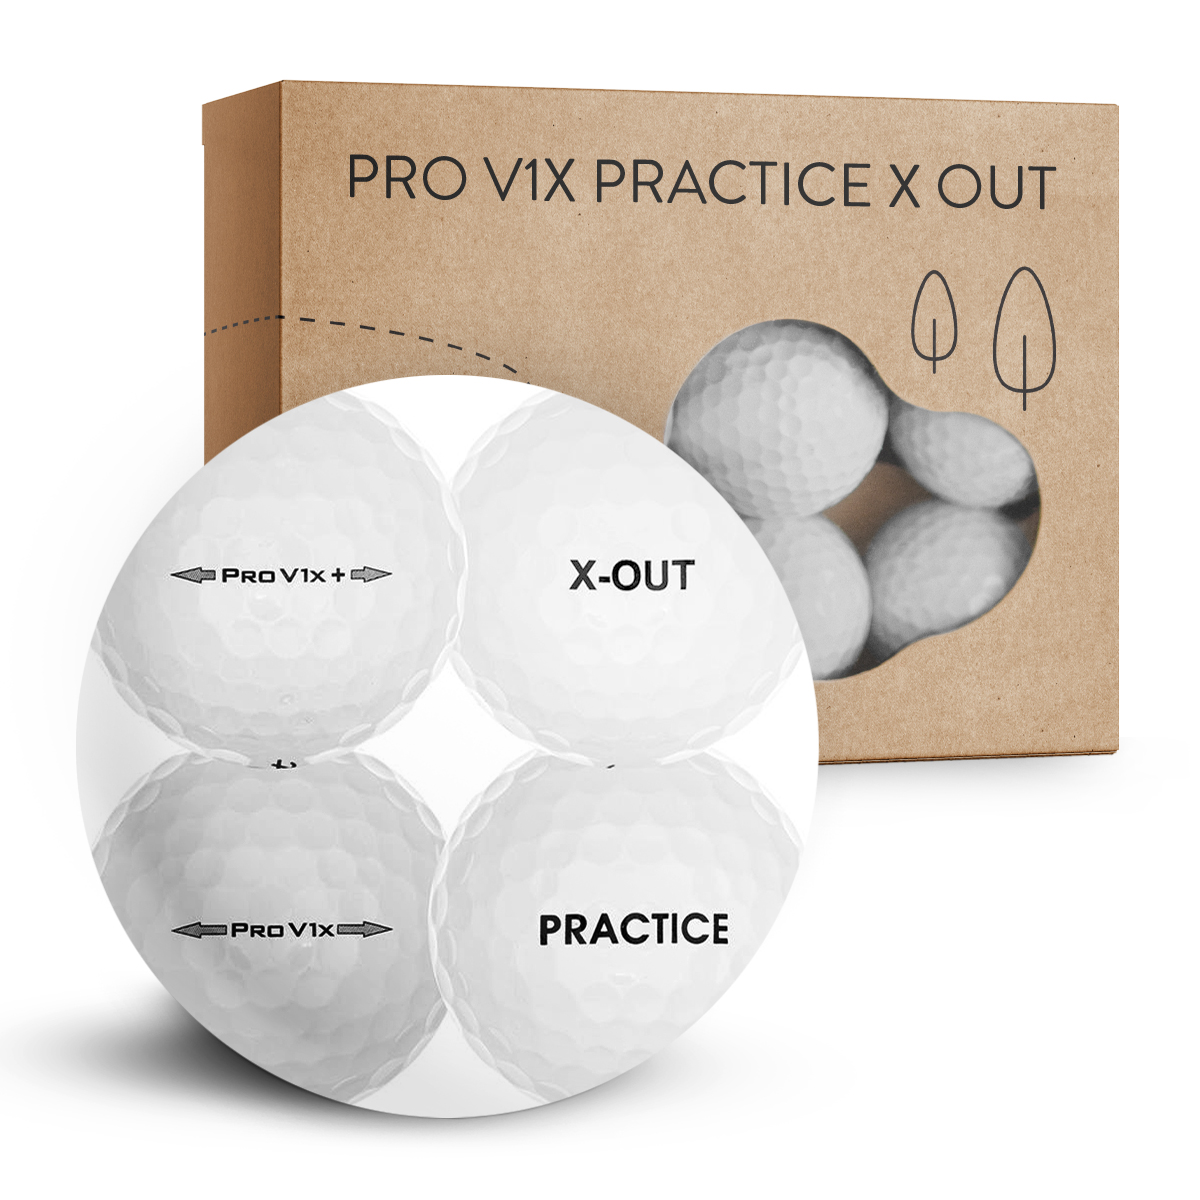 Pro V1x Practice/X-Out